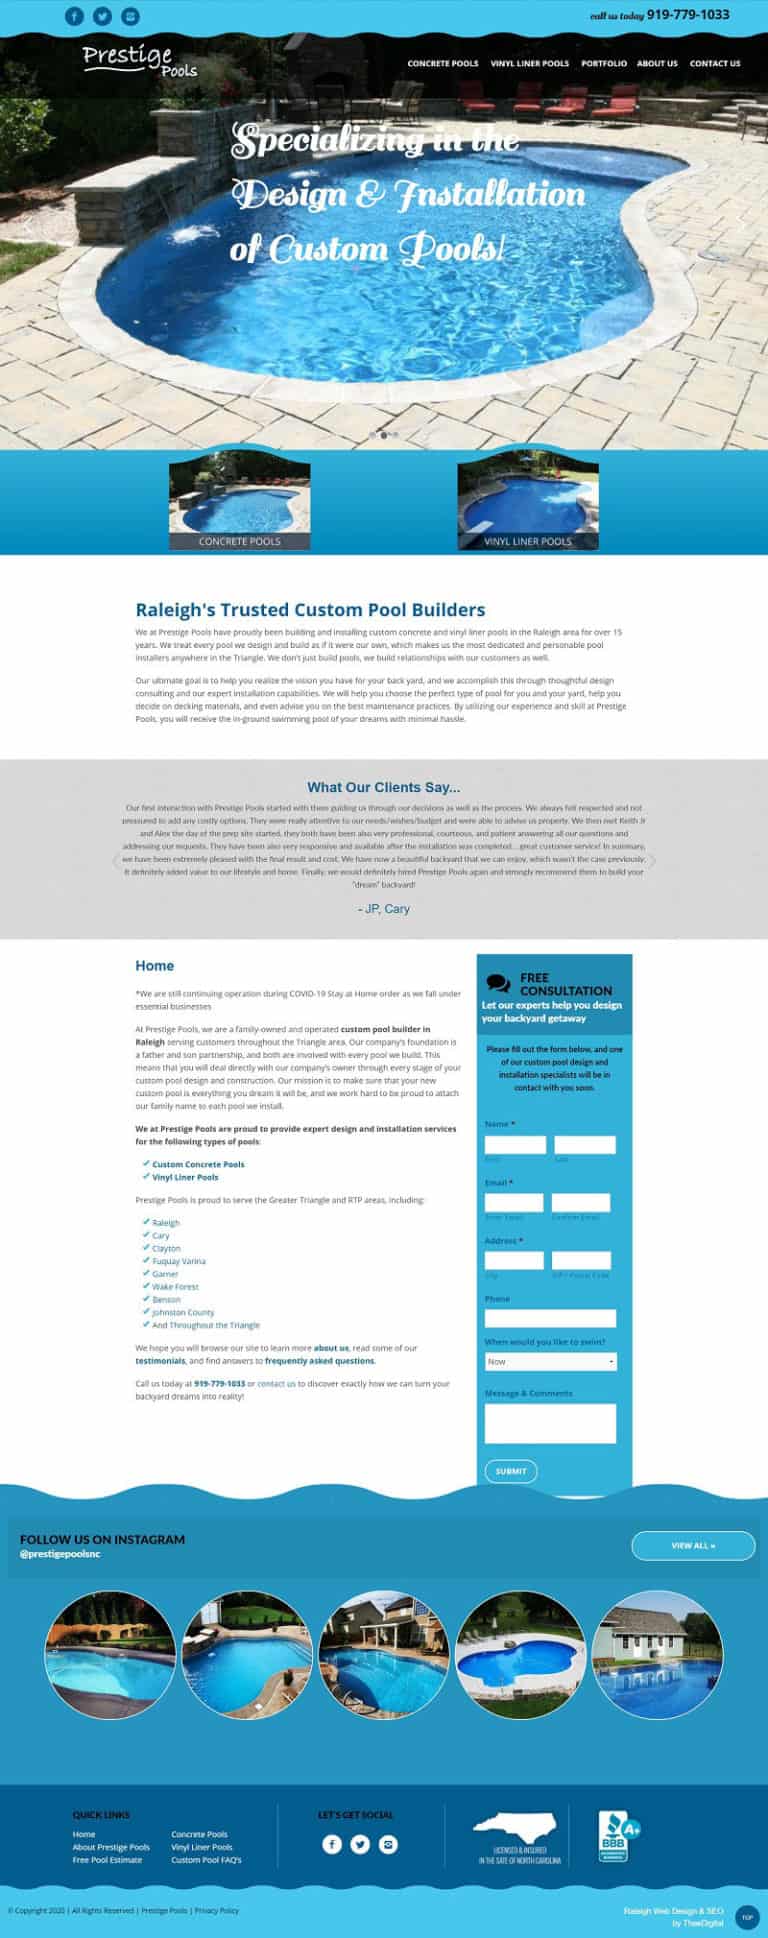 Raleigh digital marketing agency optimizes pool company website